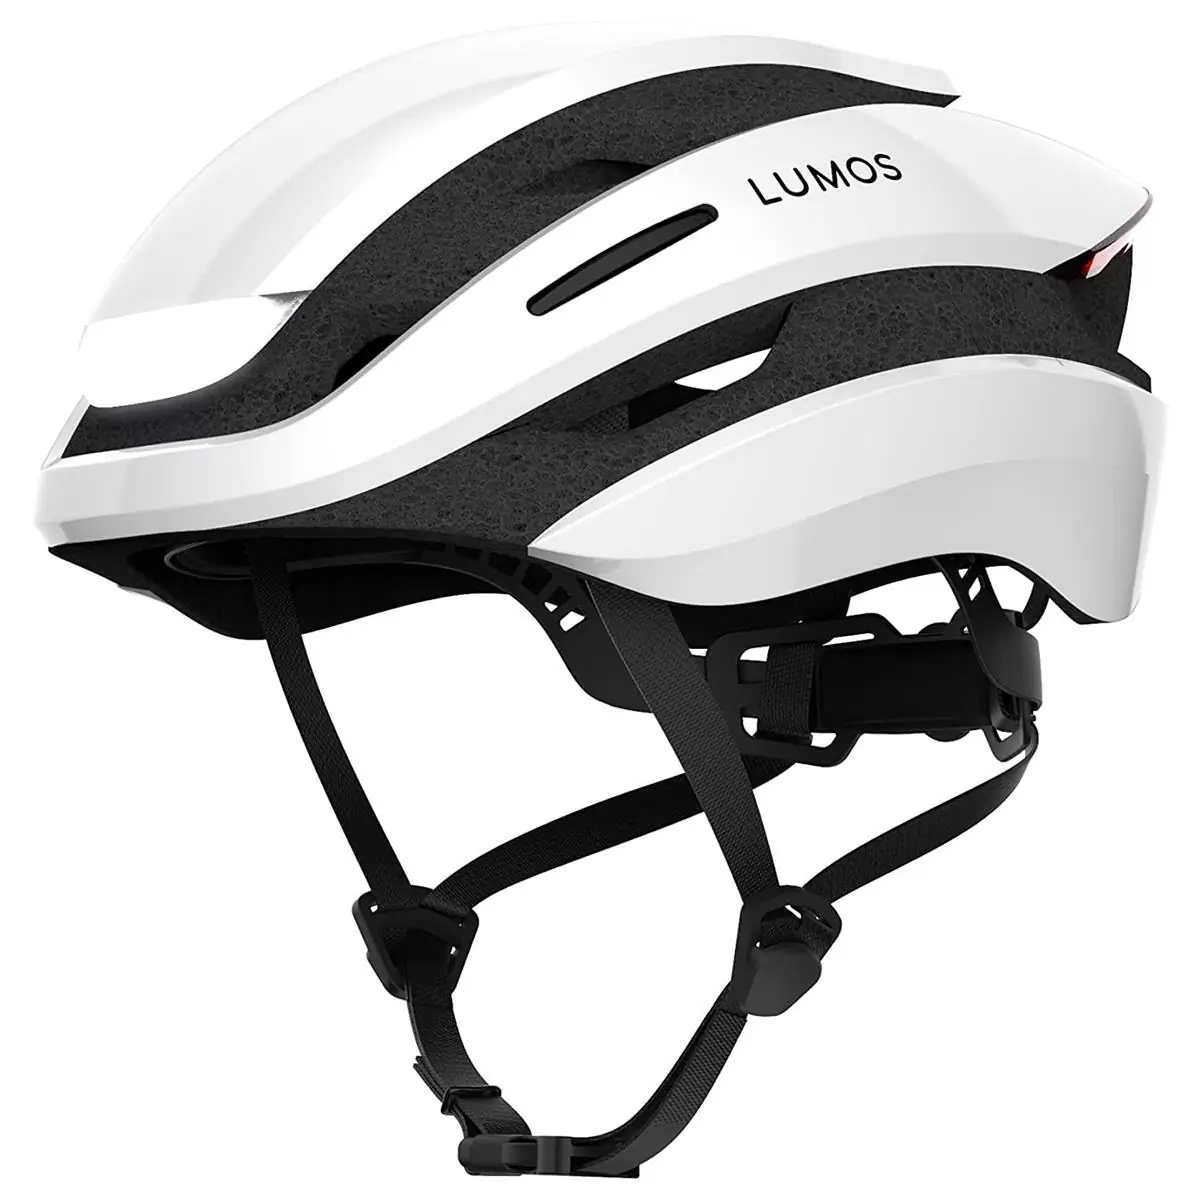 Ultra Helmet White Size M/L (54-61cm) - image